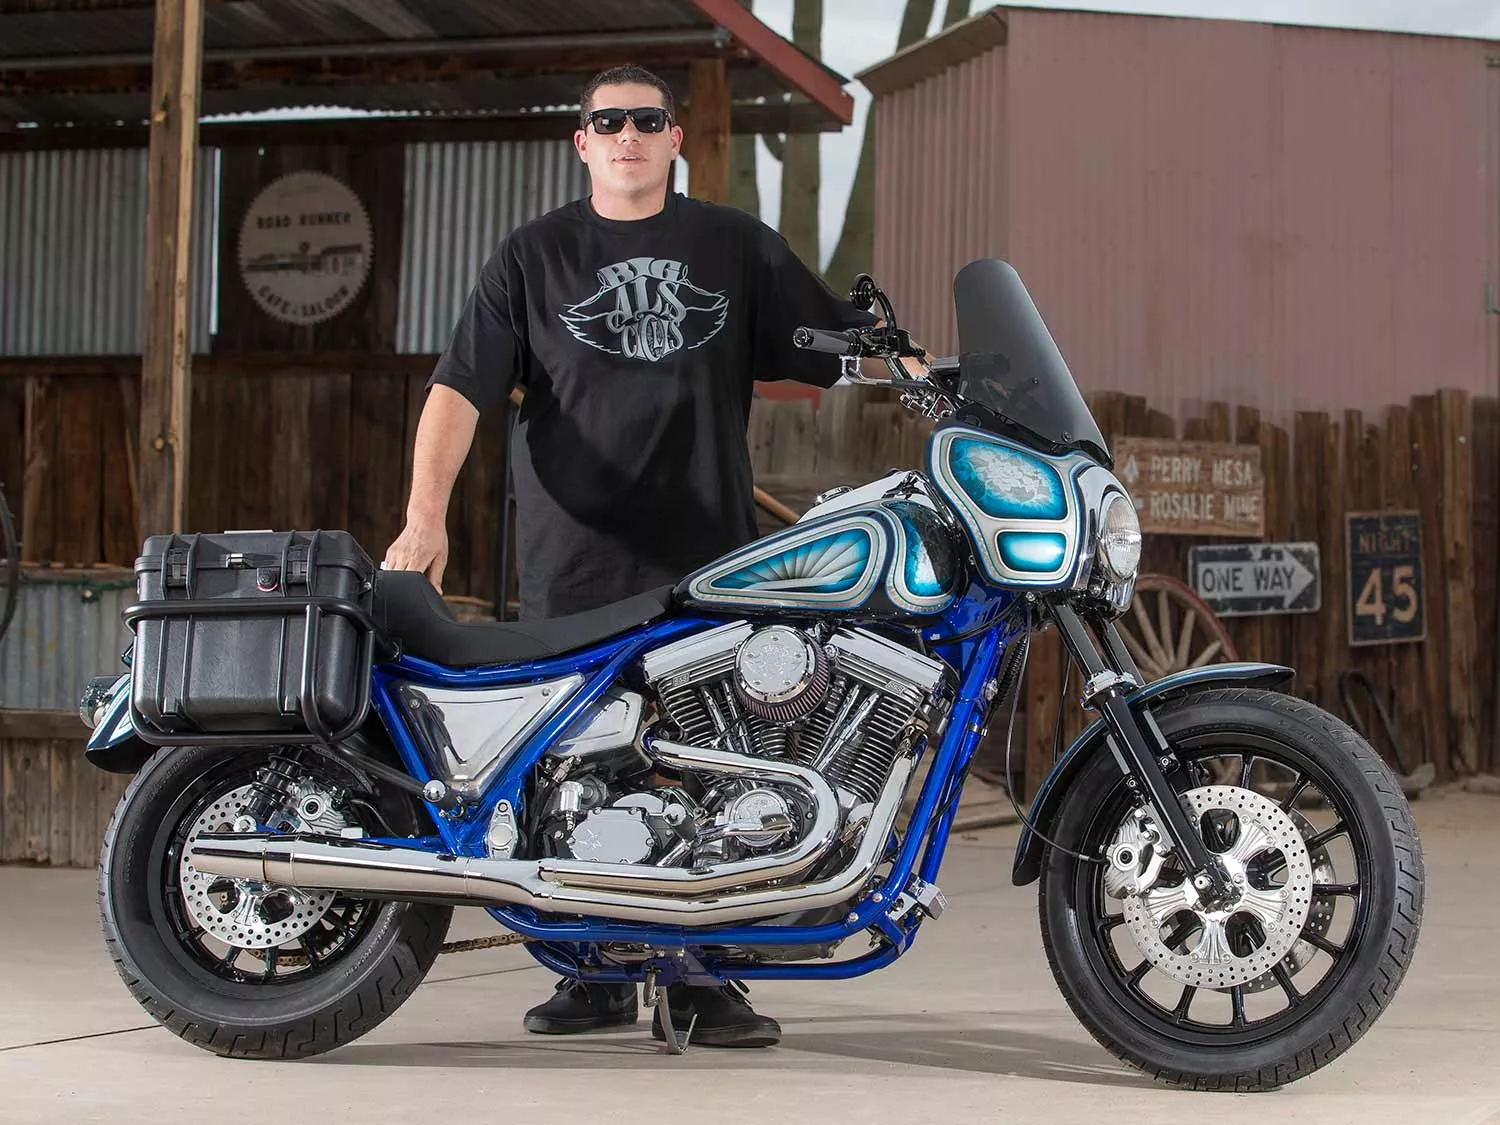 Al Raposo with his custom Harley-Davidson FXR.